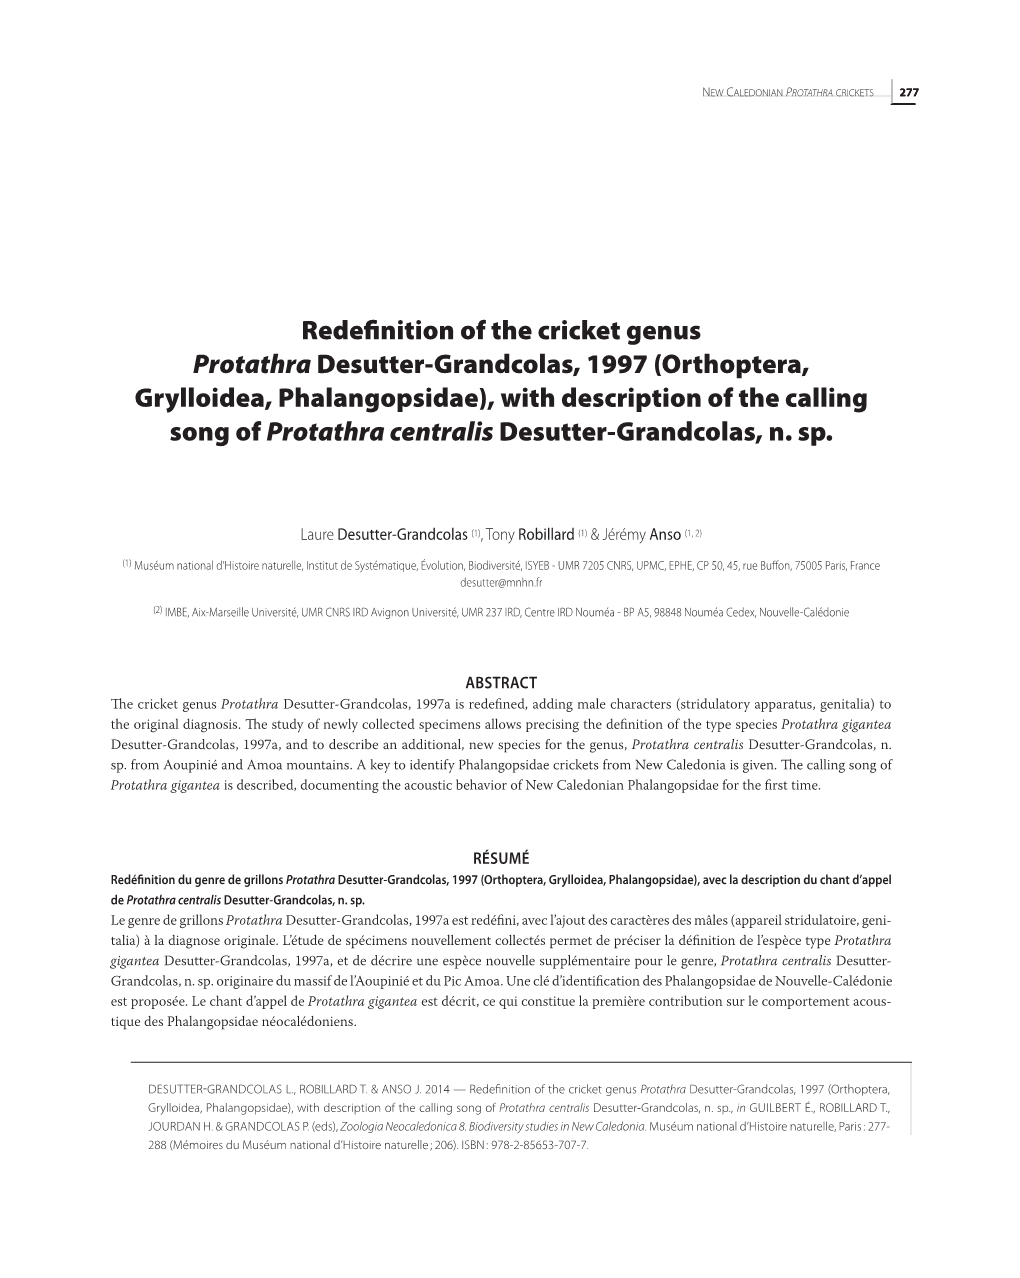 Redefinition of the Cricket Genus Protathra Desutter-Grandcolas